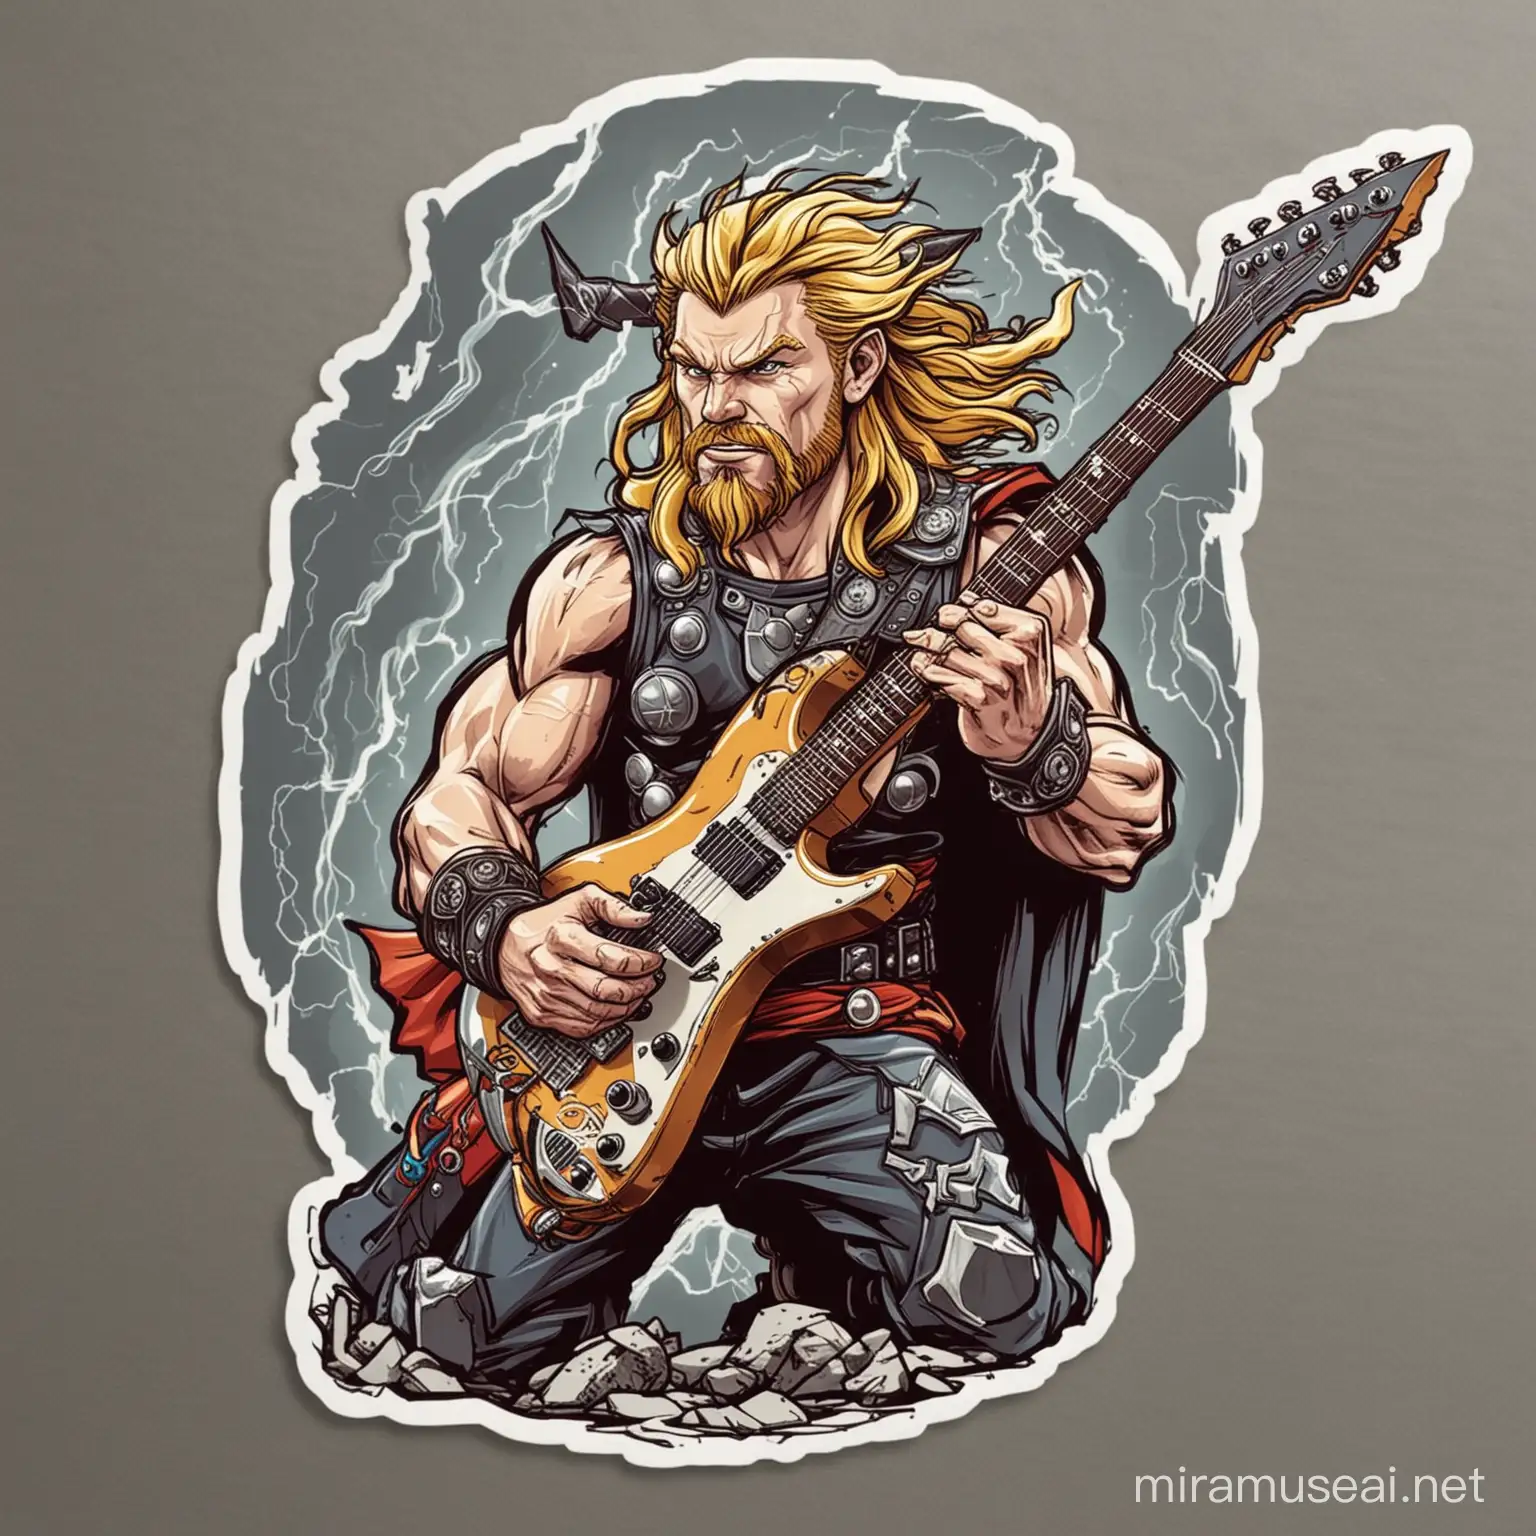 Thor the Rock Star God of Thunder Shredding Electric Guitar